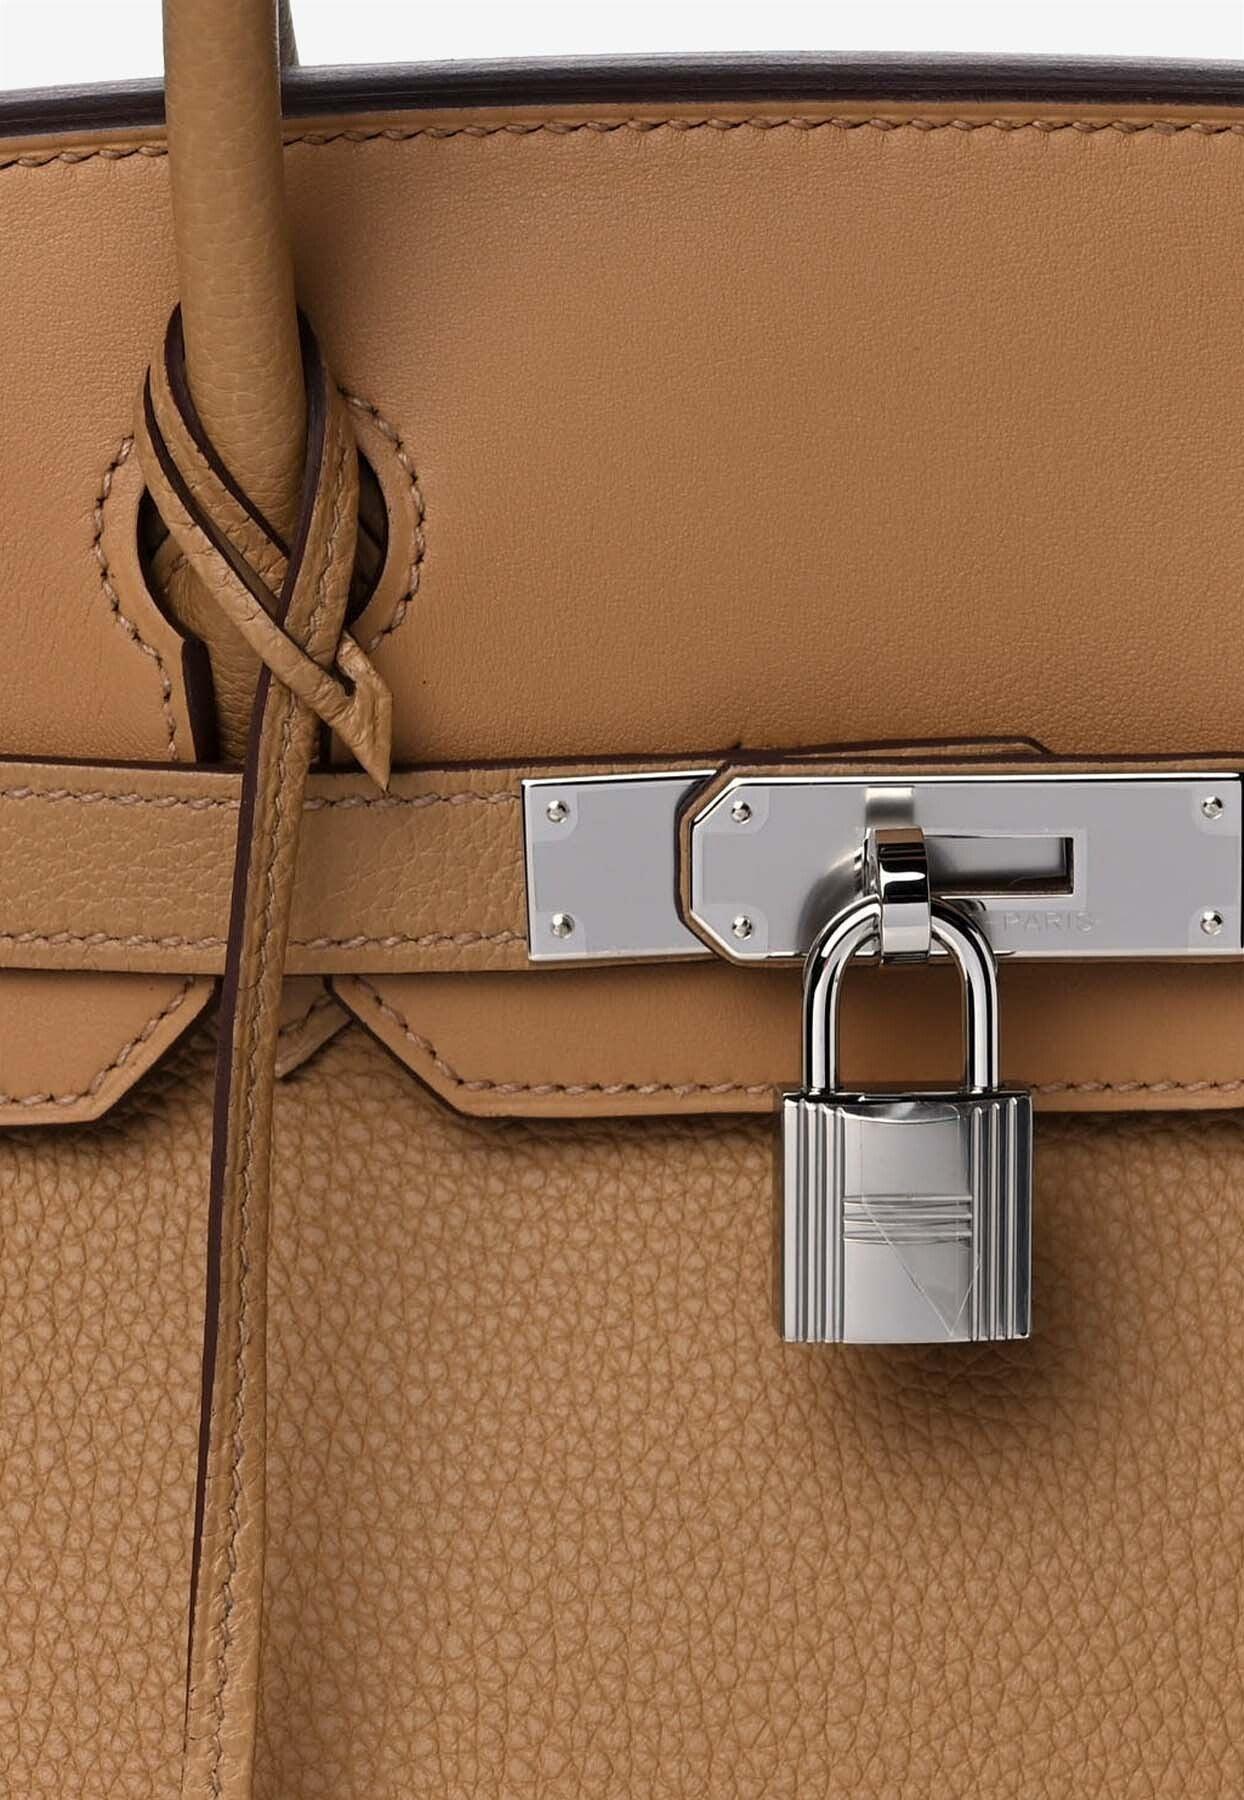 Hermès Birkin 3-in-1 Handbag